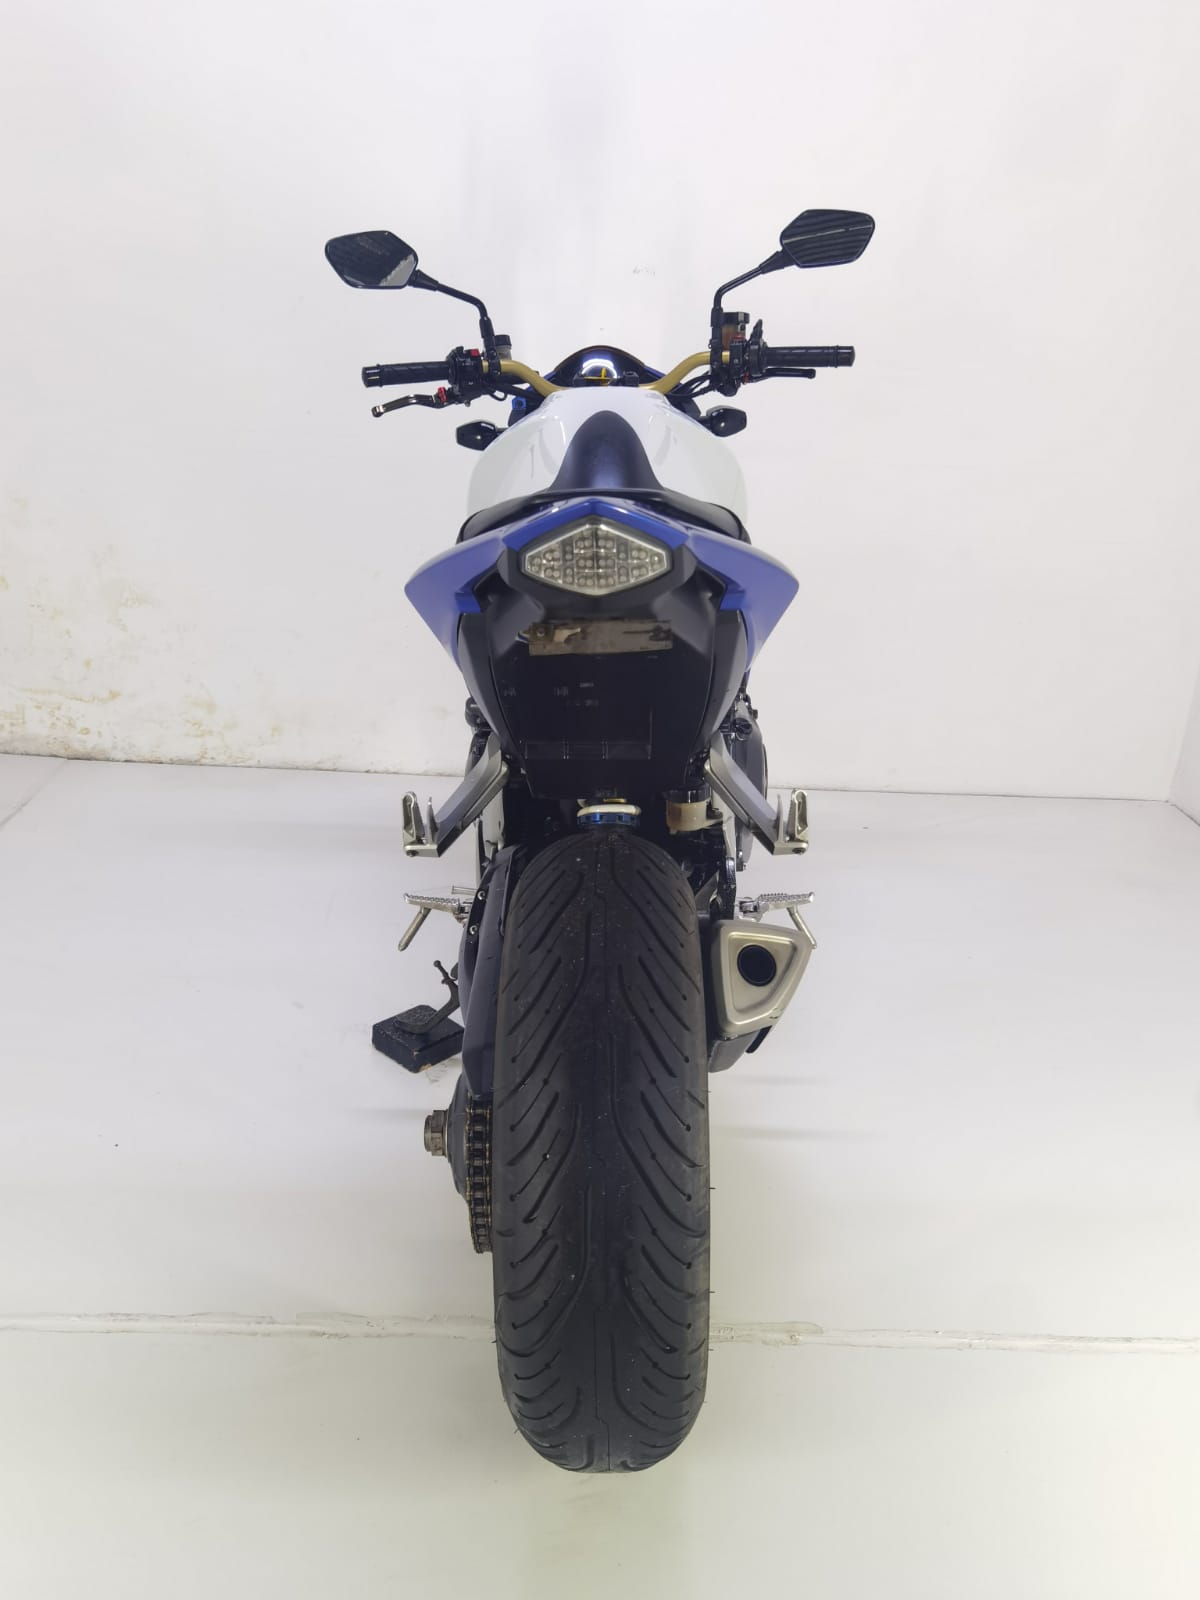 2012 Honda CB1000 R (Finance available)